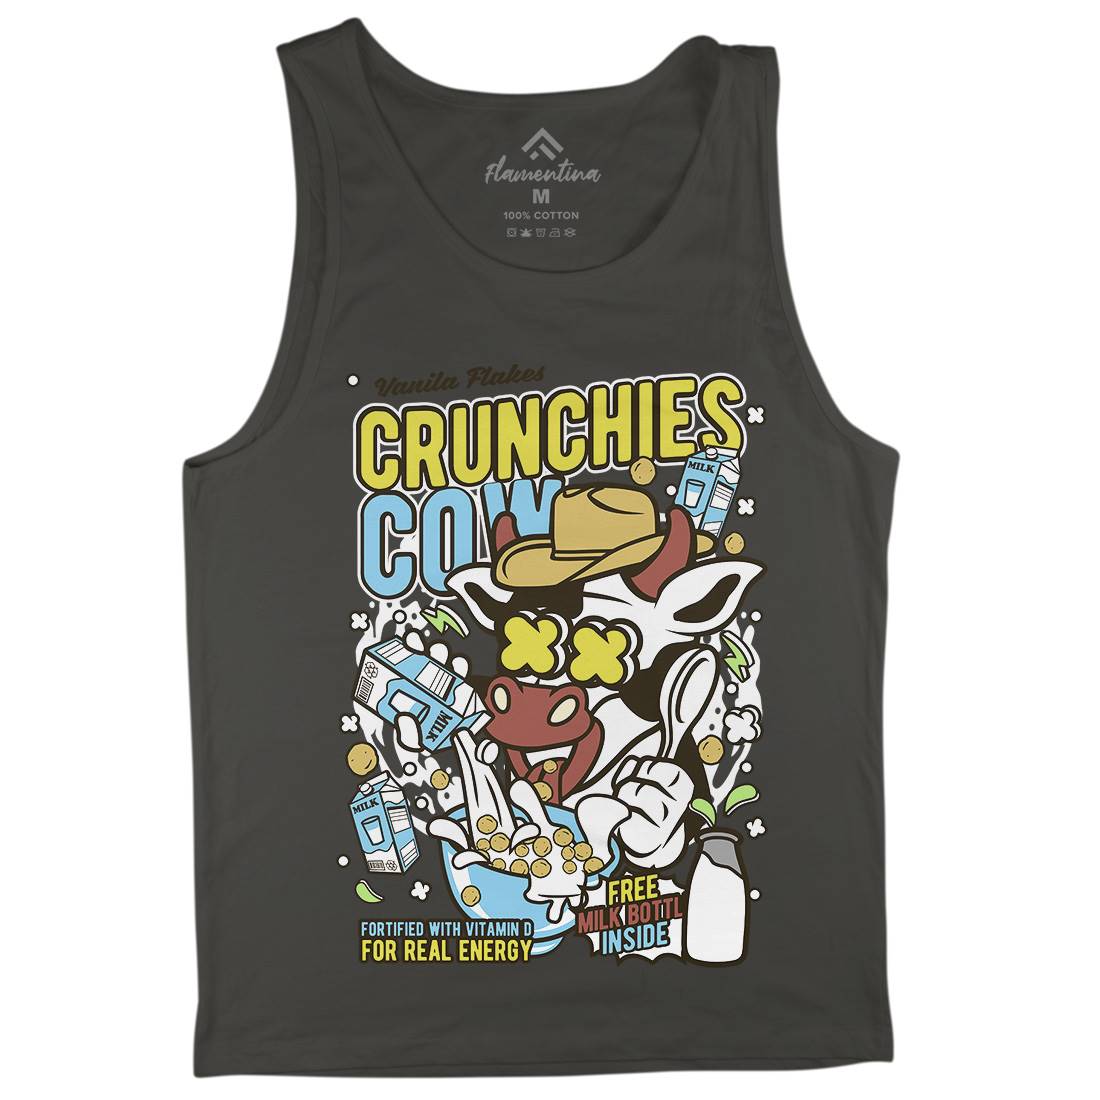 Crunchies Cow Mens Tank Top Vest Food C533